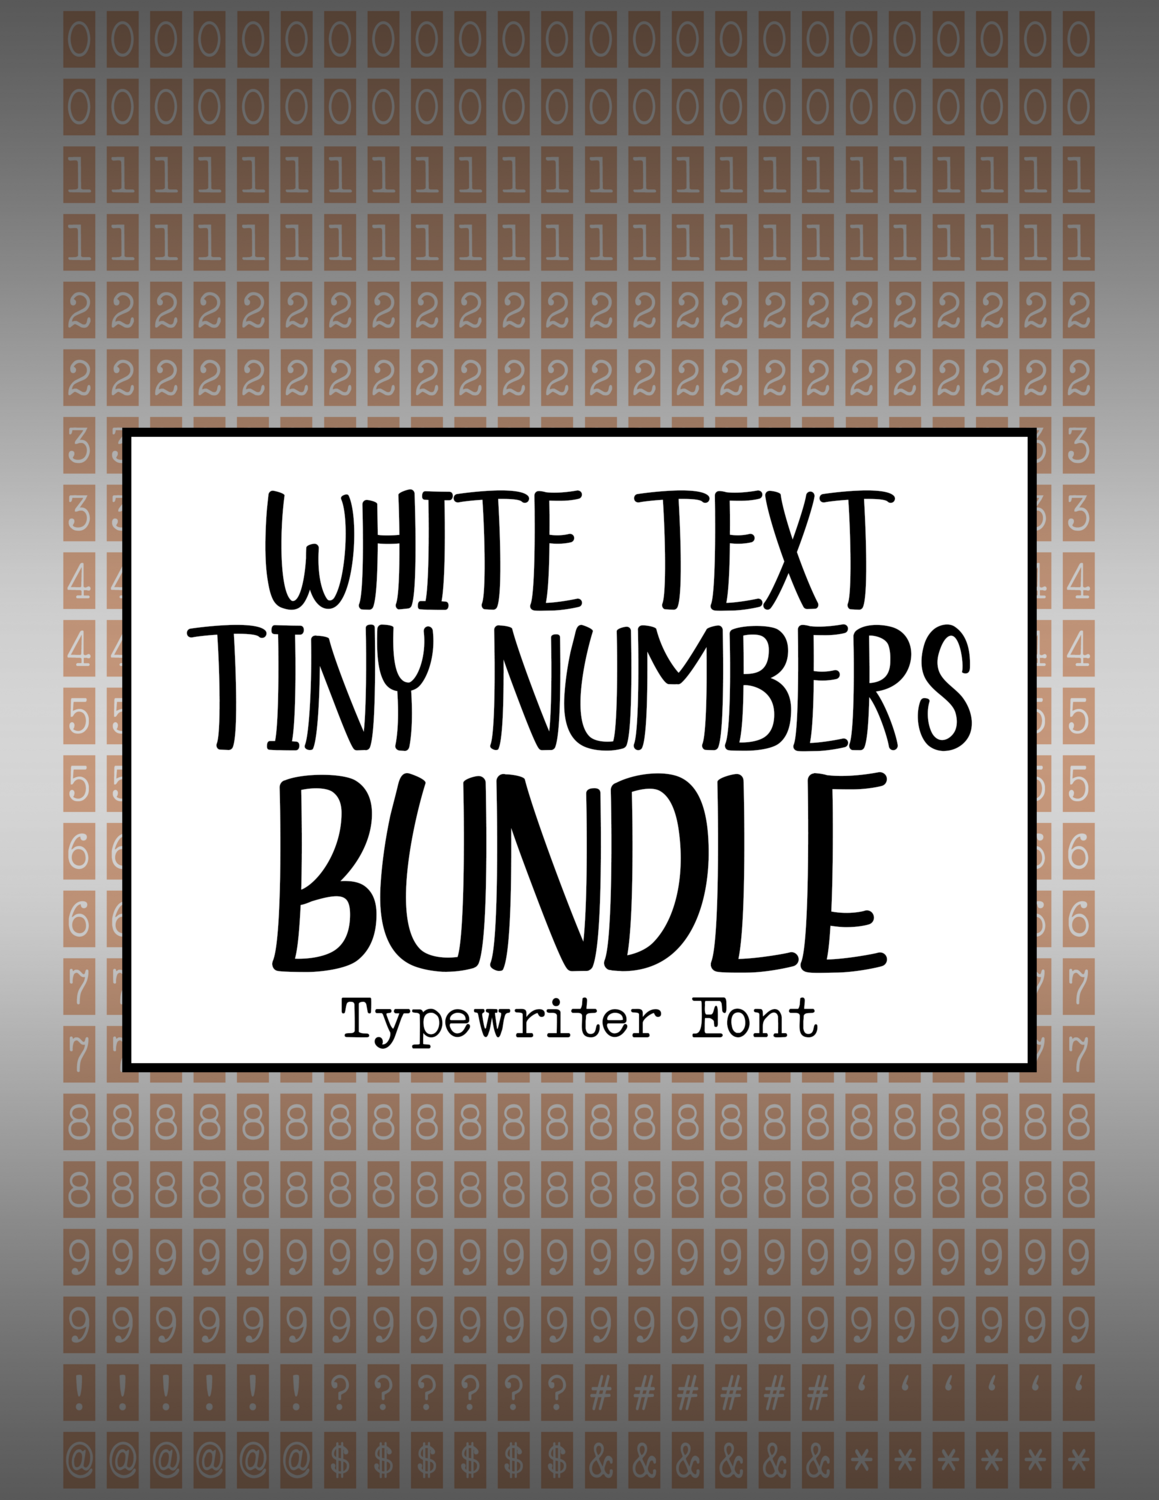 Bundle #86 'Typewriter' Tiny Numbers - White Text